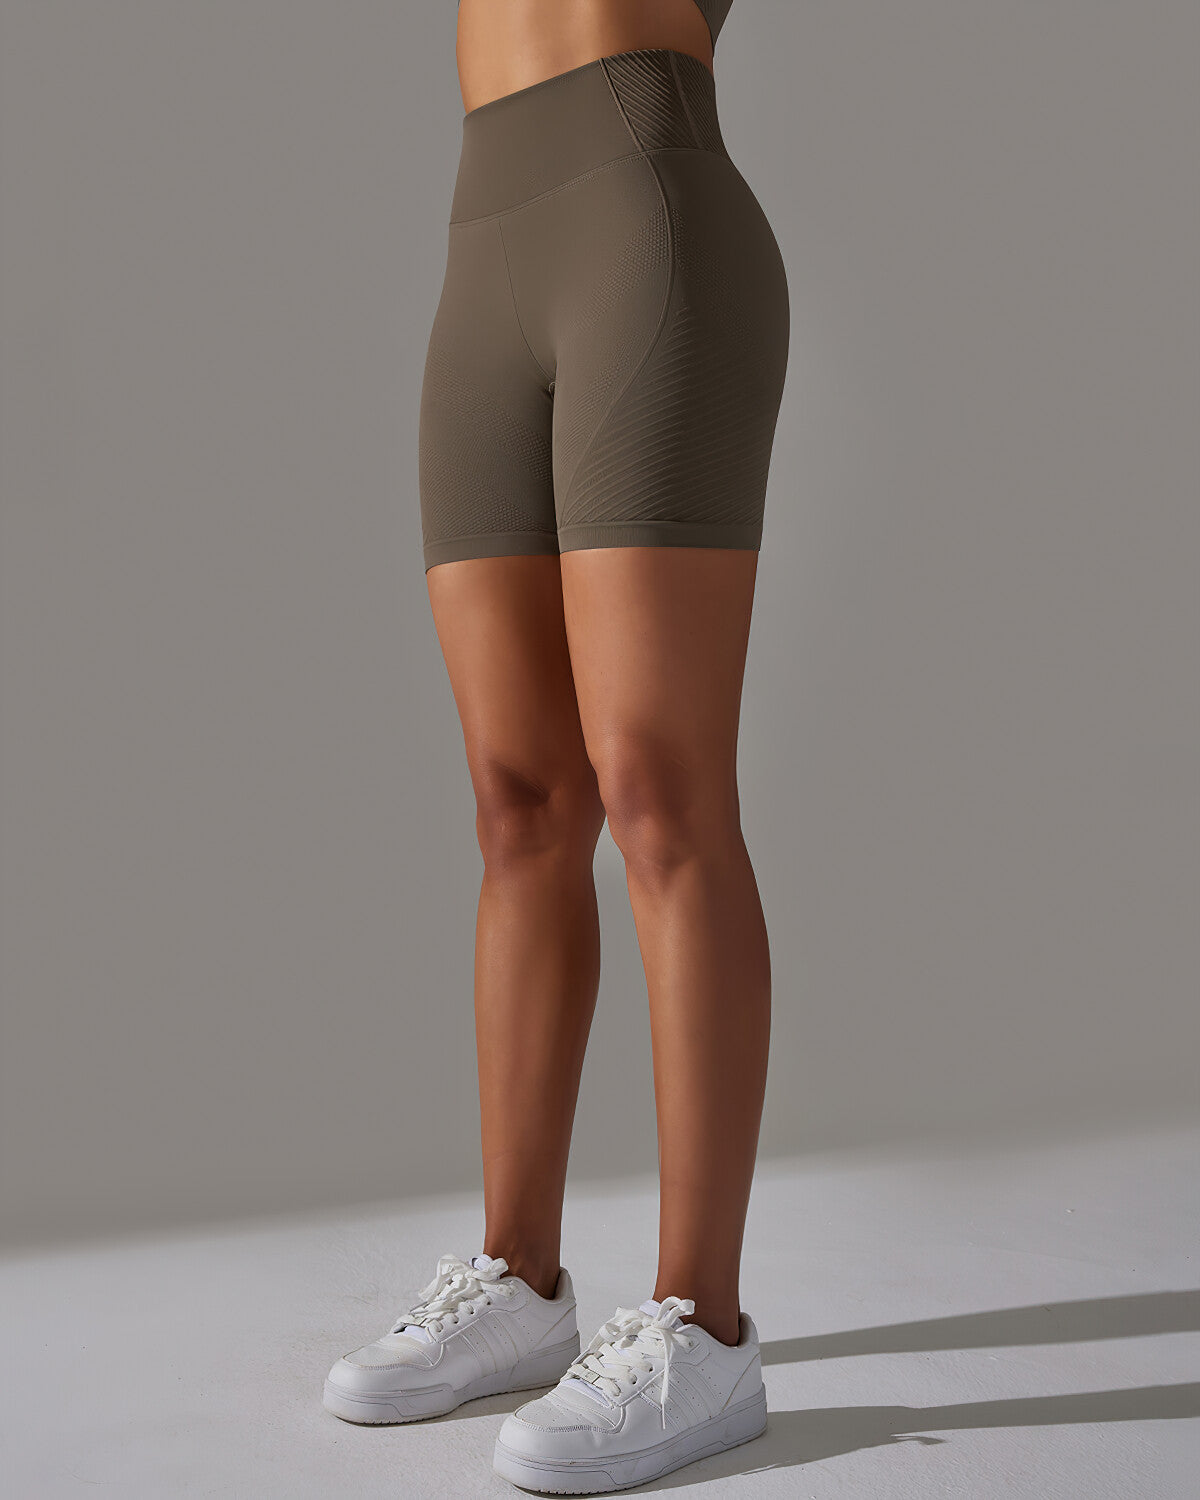 Cheyenne Shorts - Brown